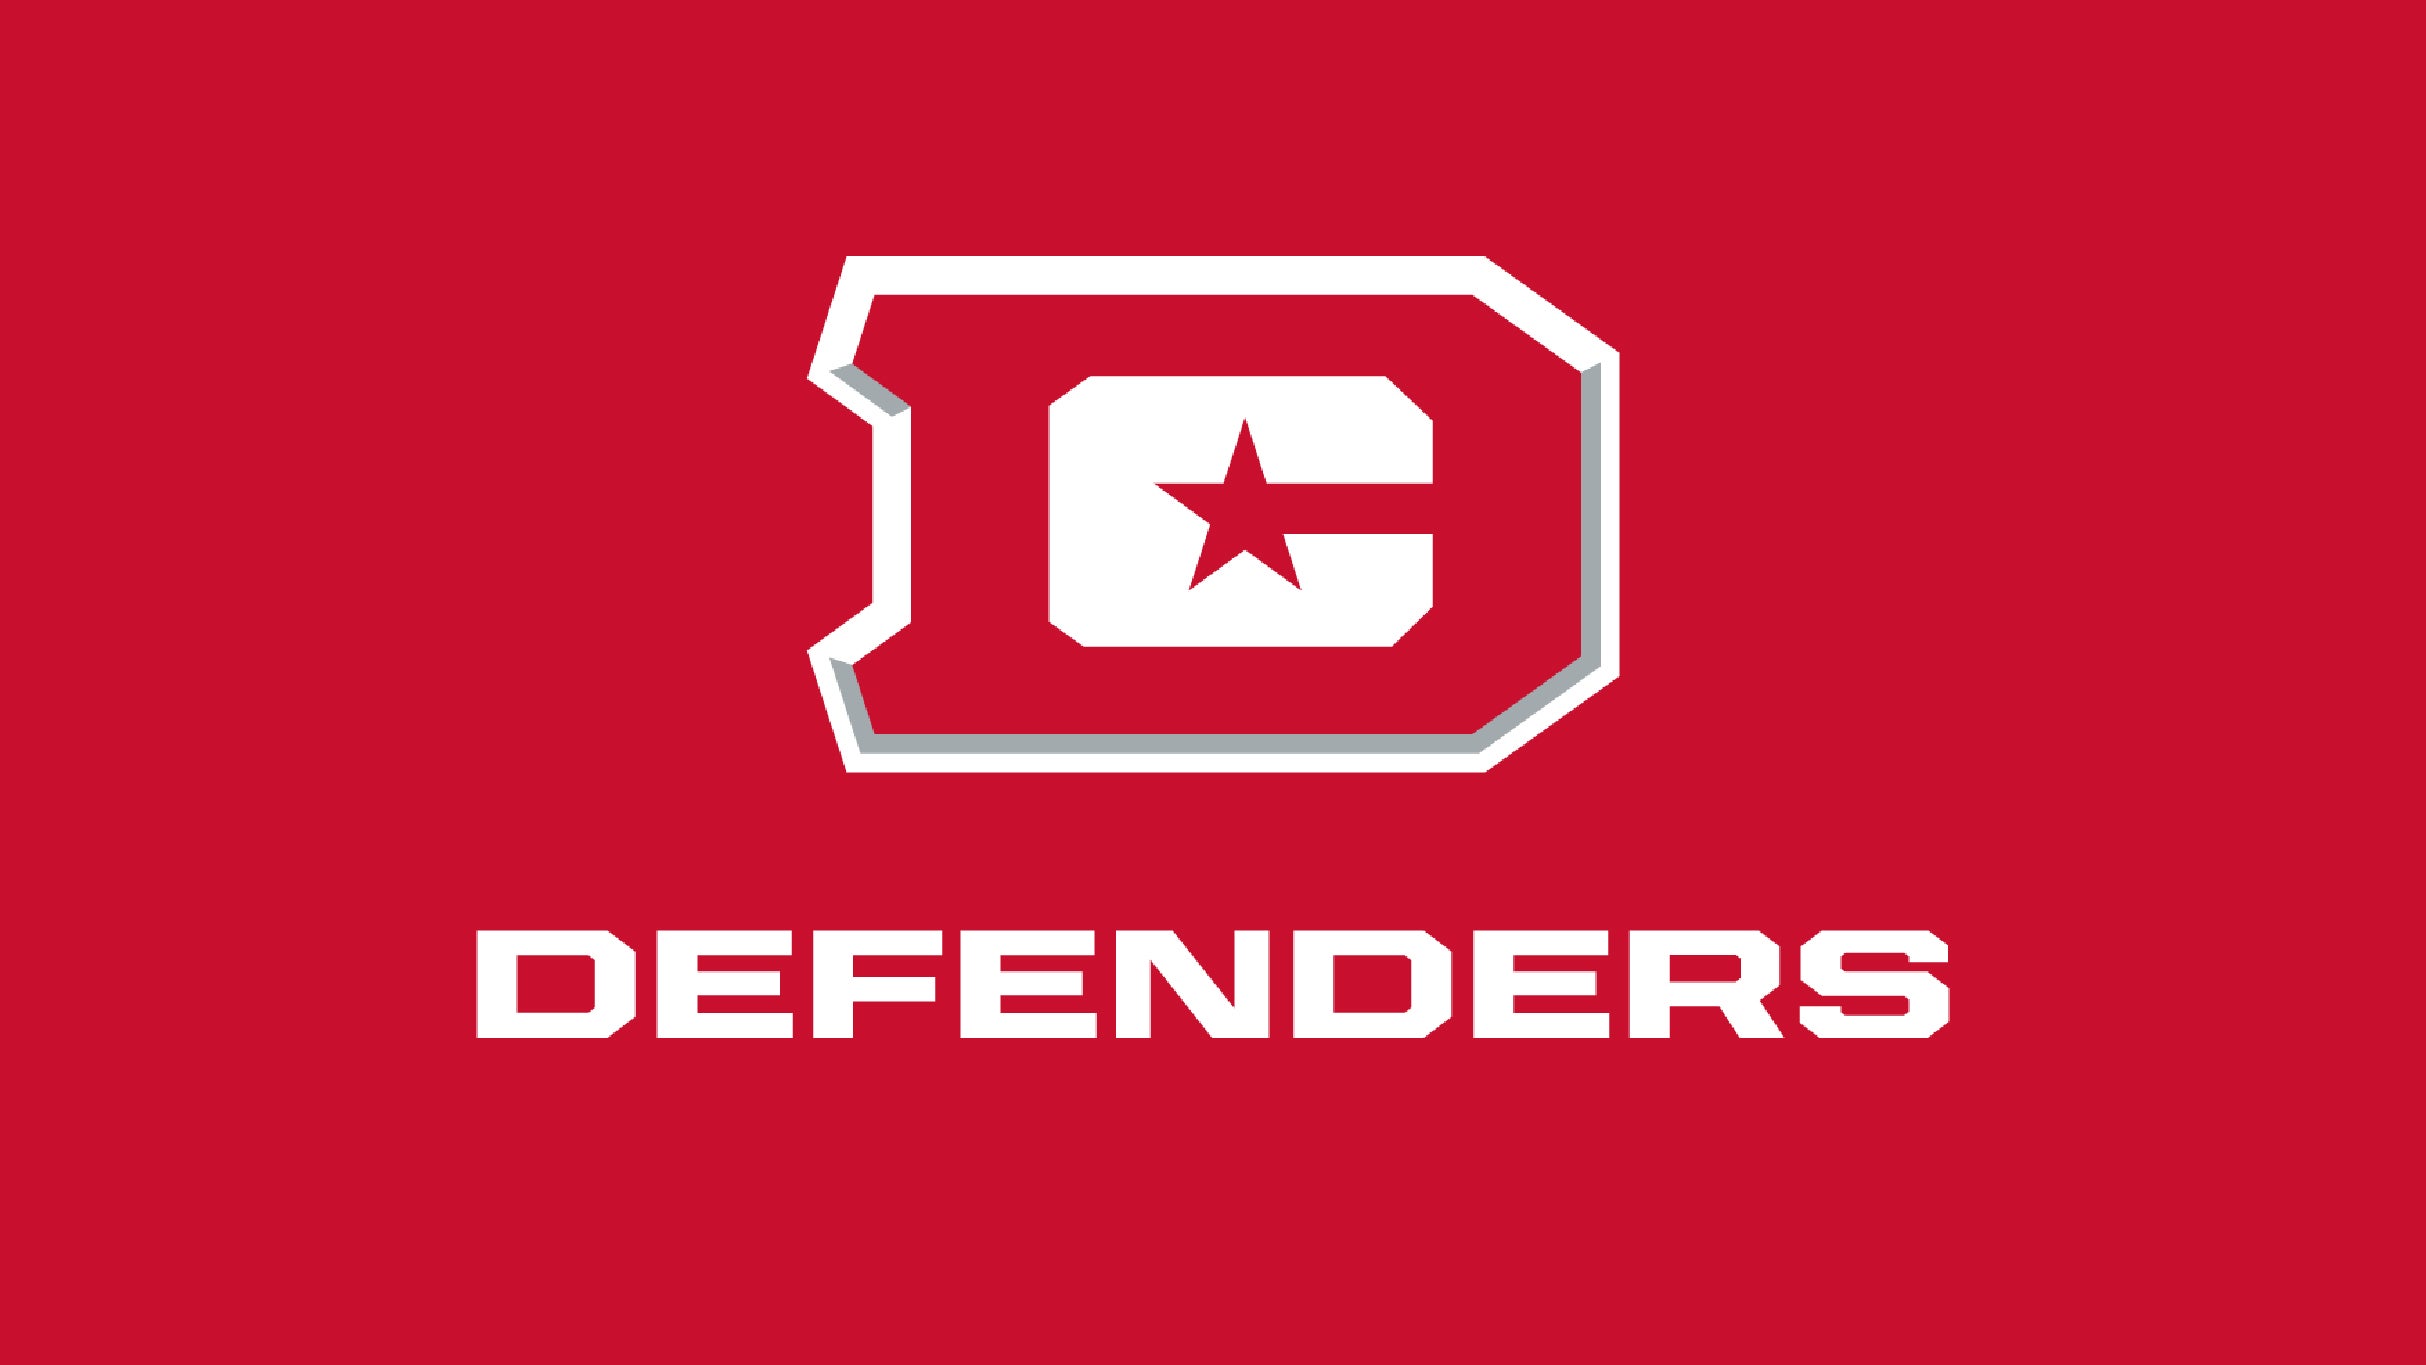 DC Defenders vs. Michigan Panthers at Audi Field